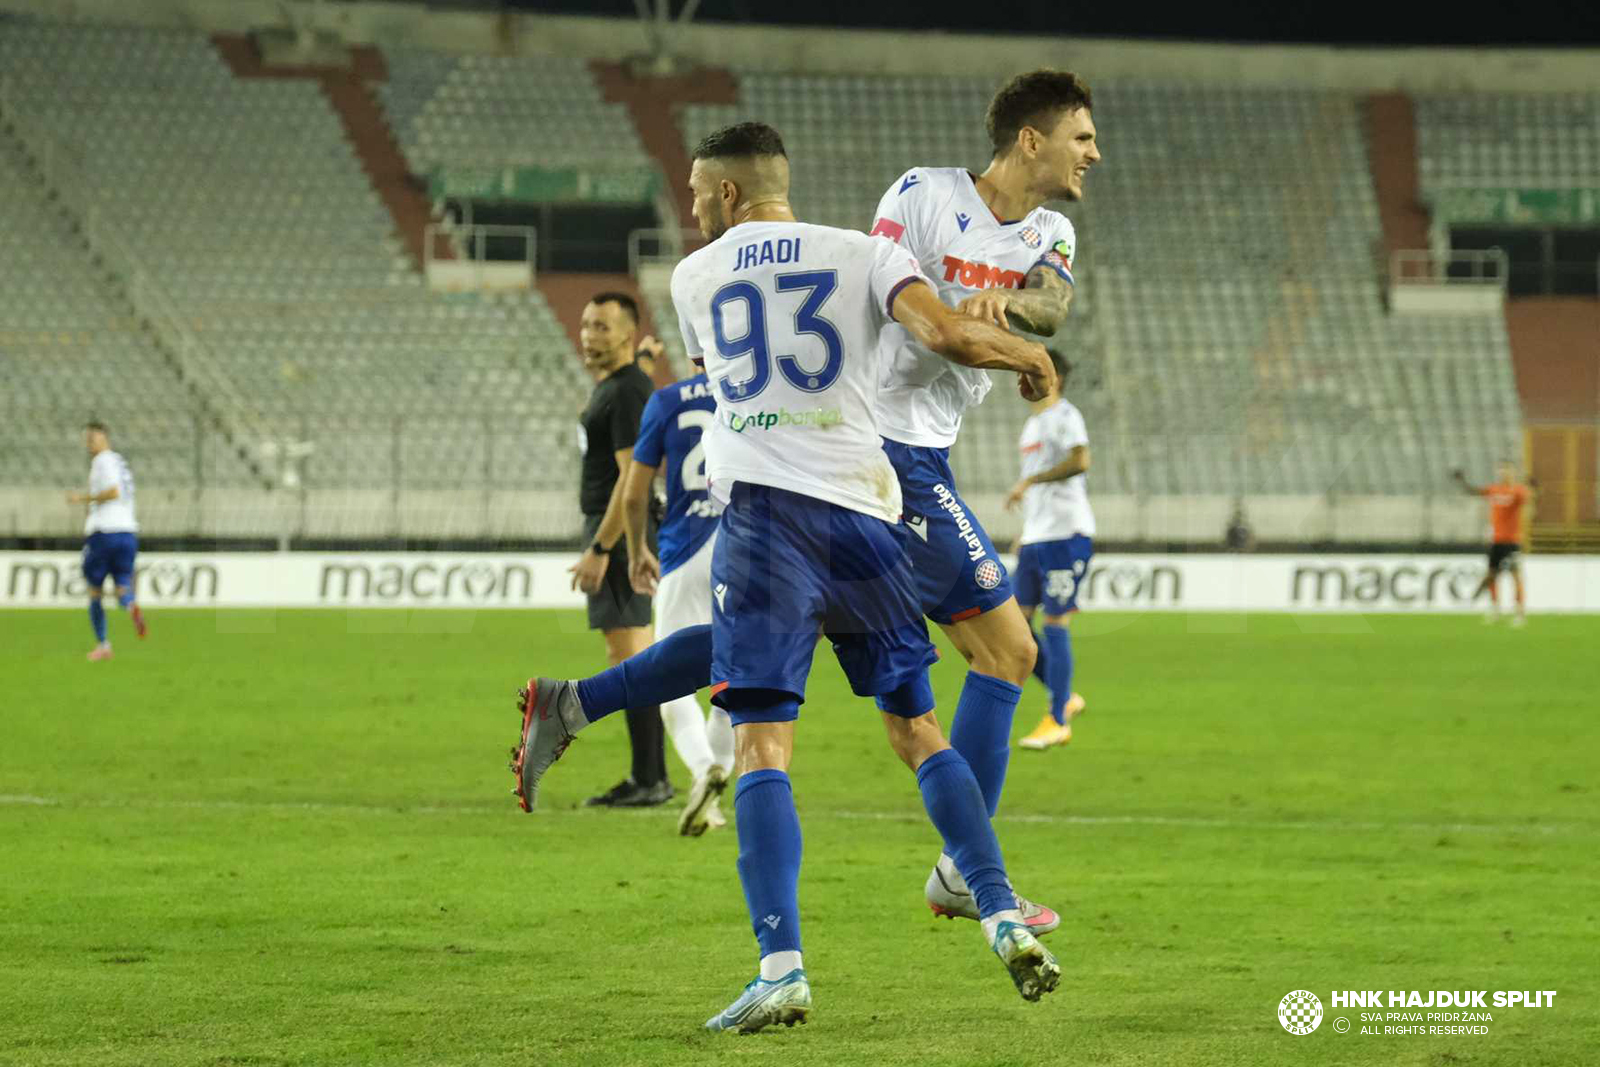 SAŽETAK] 13. kolo HT Prve lige (2020/2021): Dinamo - Hajduk 3:1 